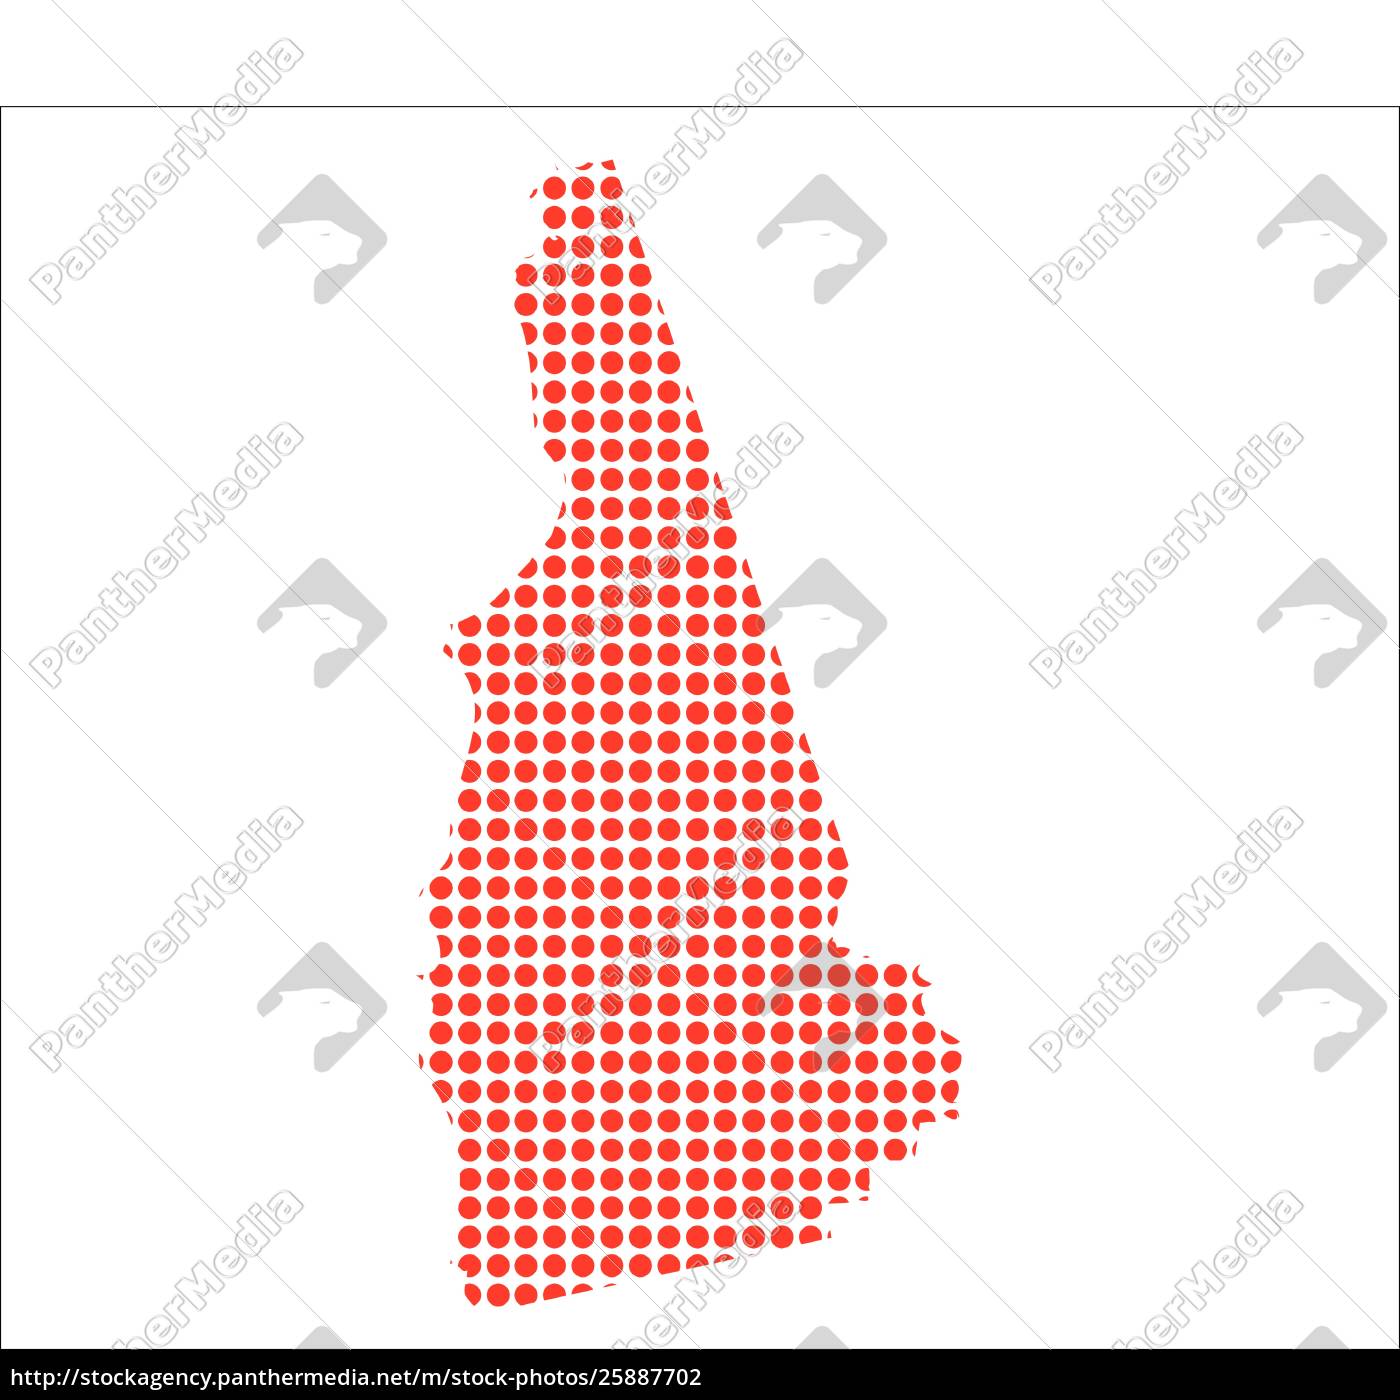 Rote-Punkte-Karte von New Hampshire - Stockfoto - #25887702